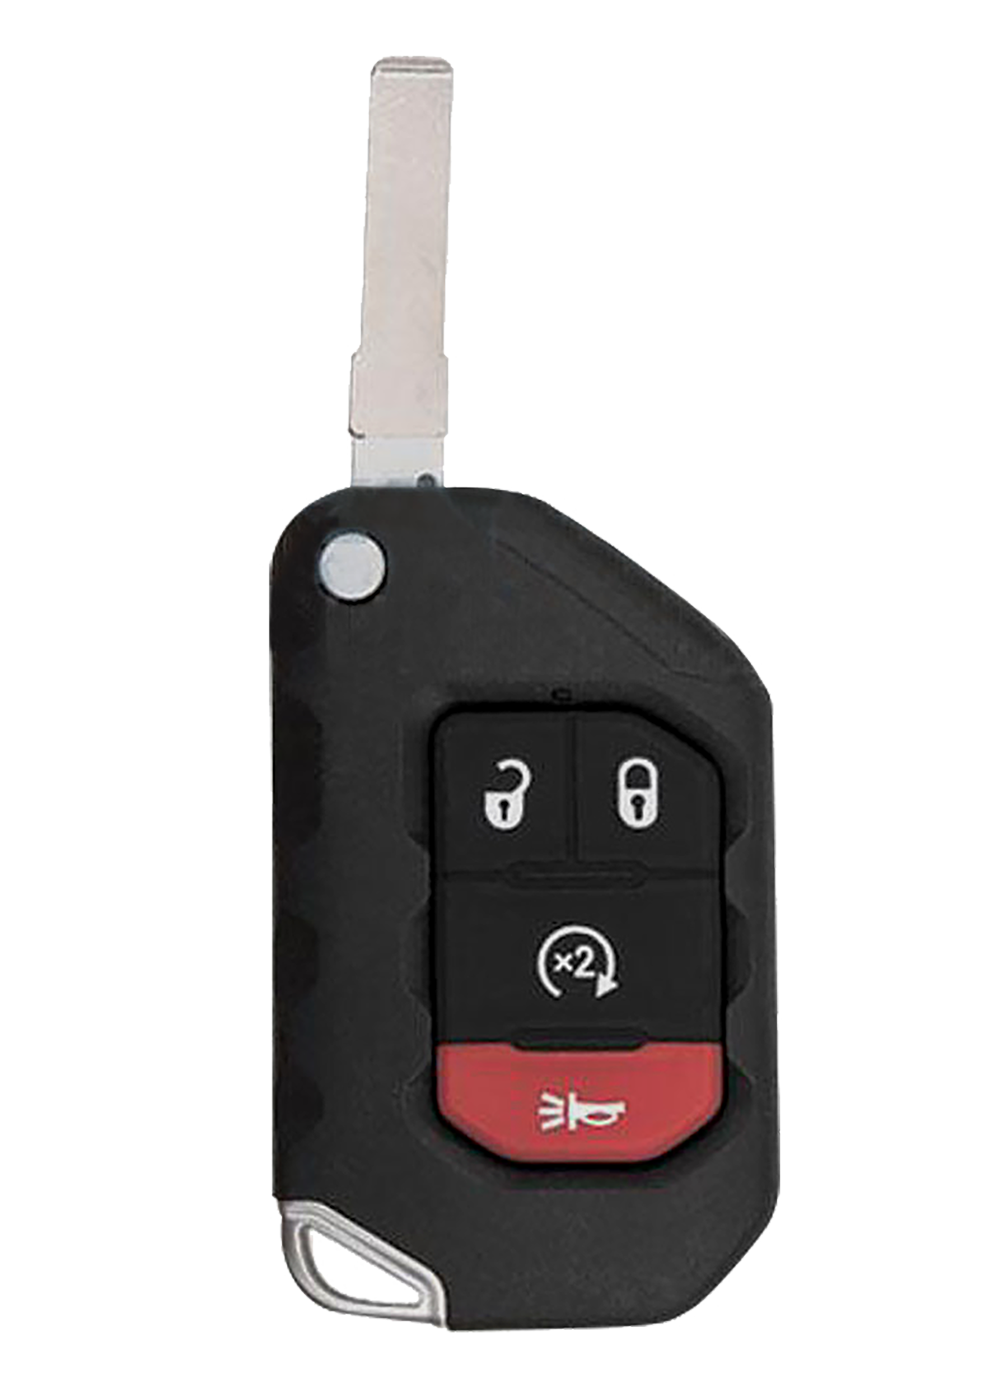 ILCO FLIP-JEEP-4B1 - Jeep 4 Button Flip Key - FCC: OHT1130261 - IAX00015890 / 036448259274 - Aftermarket for 68416784